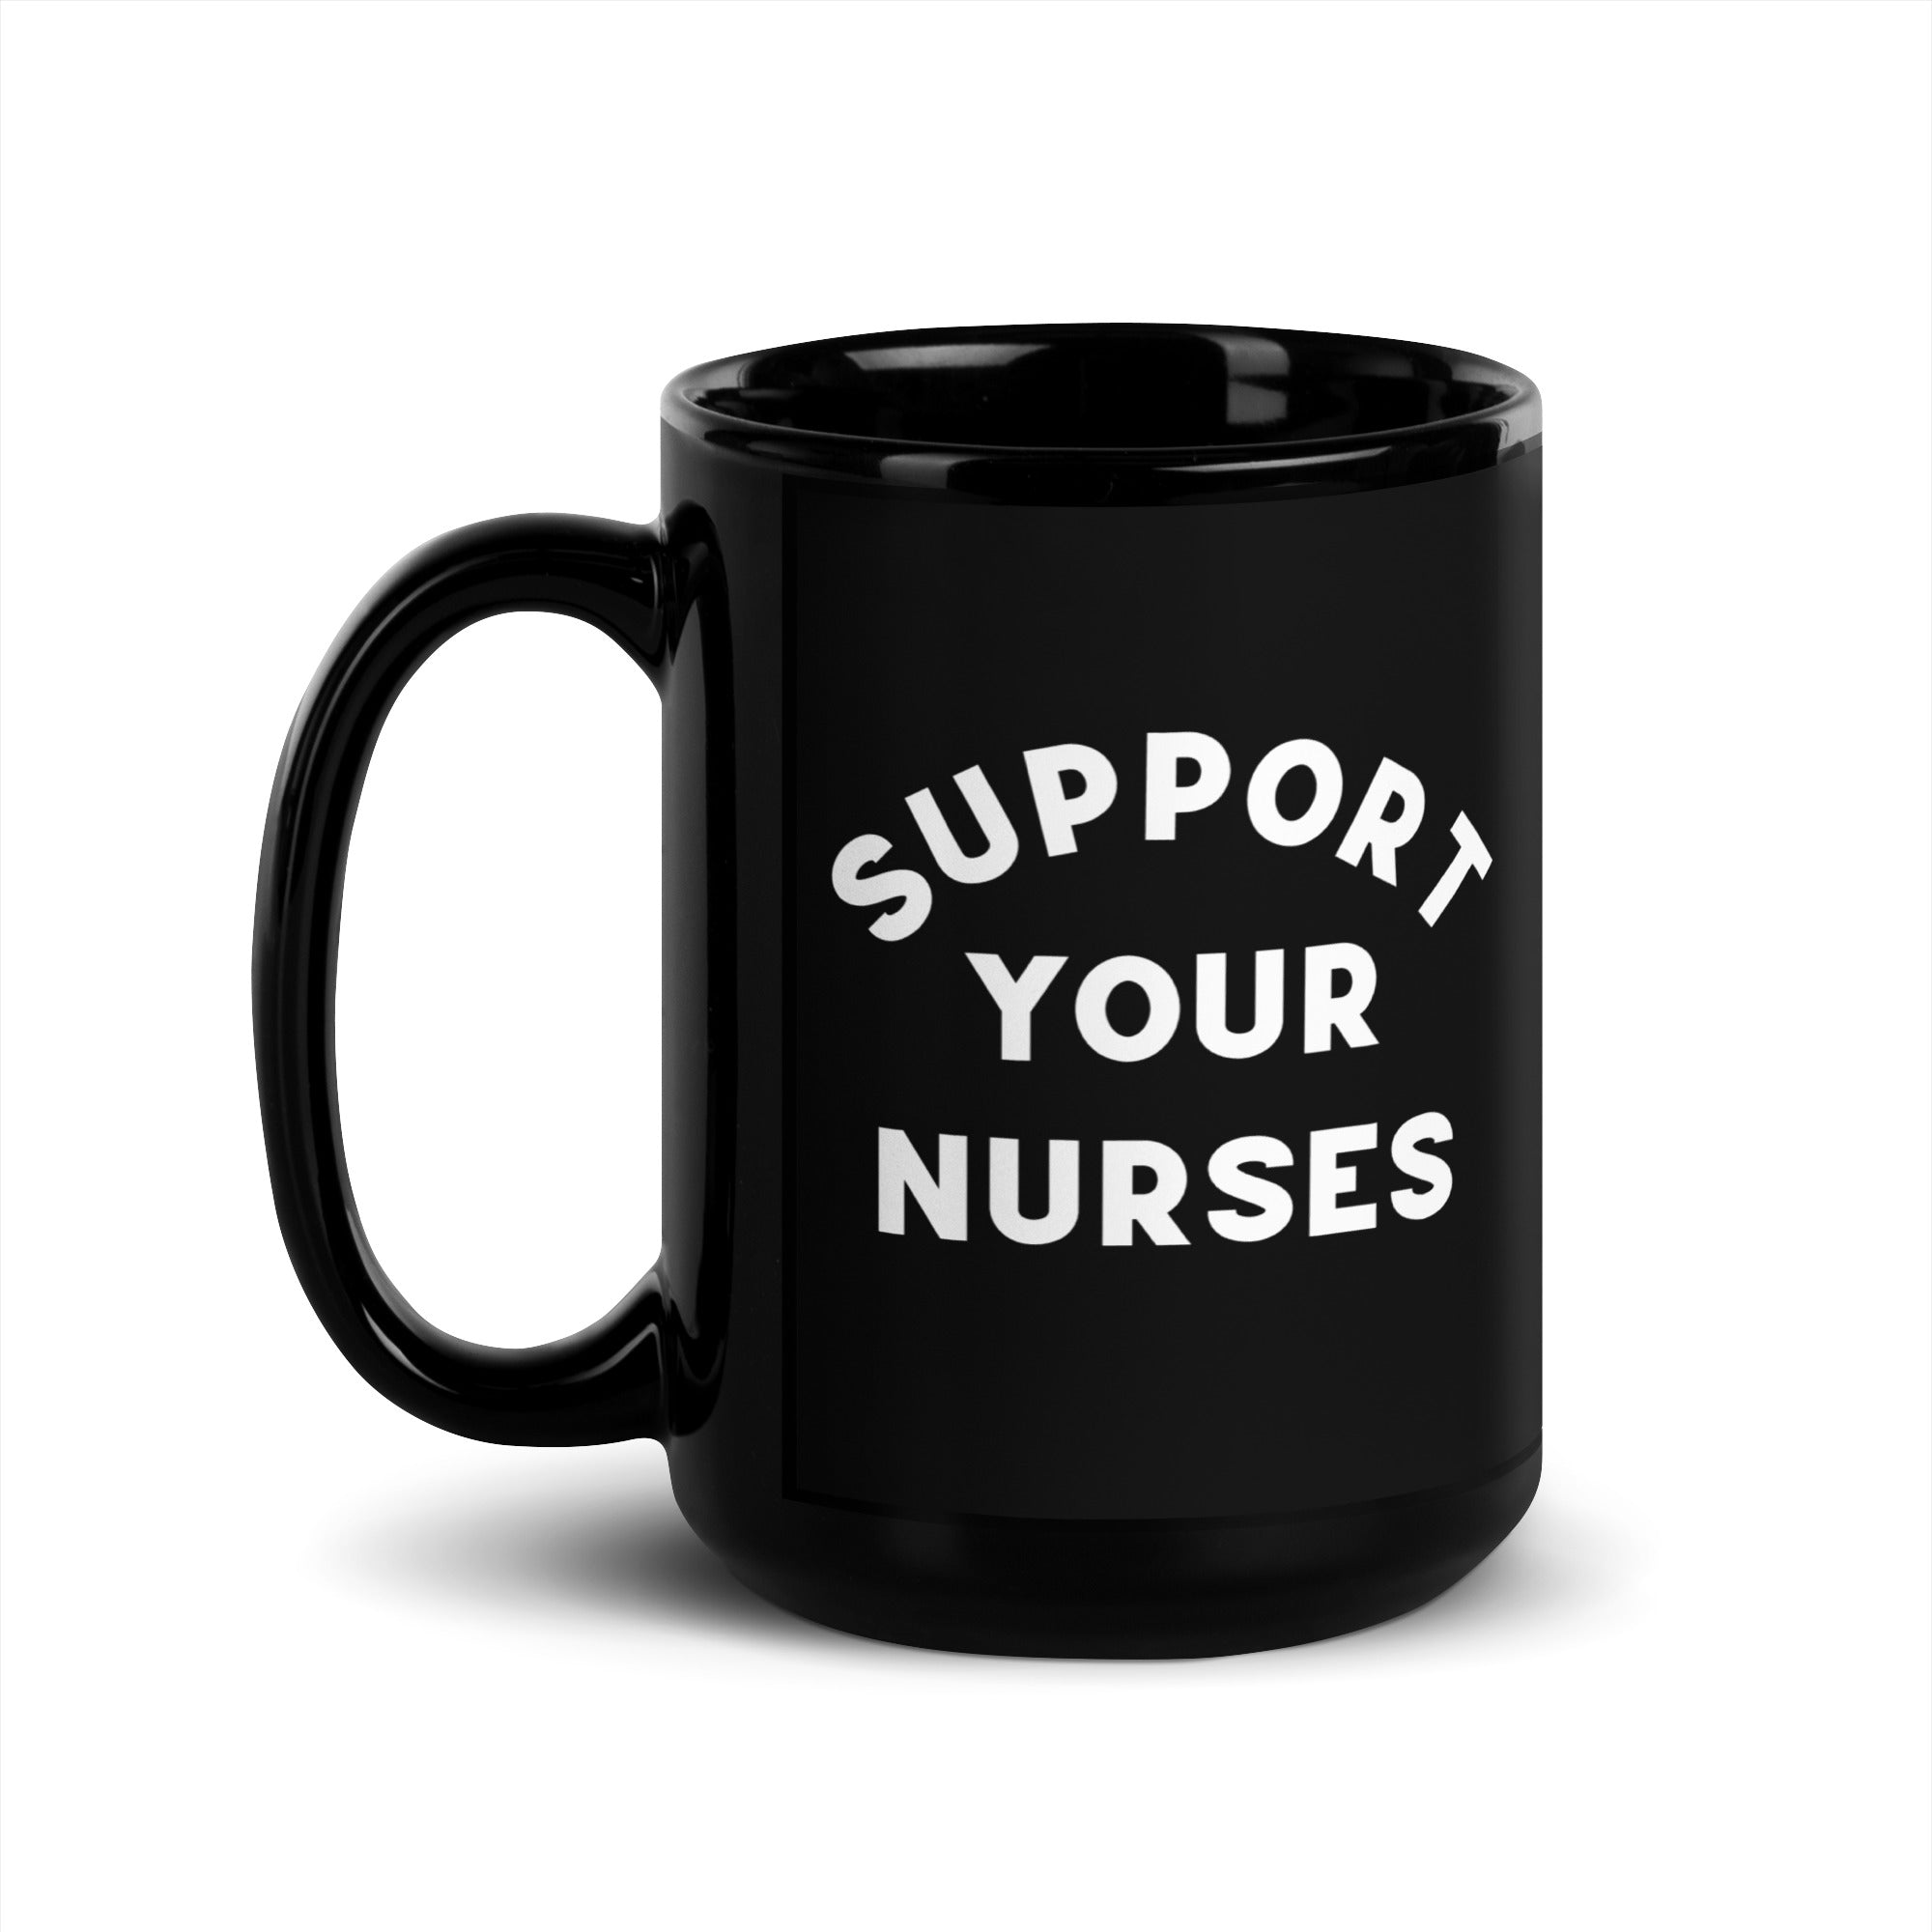 Support Your Nurses Mug